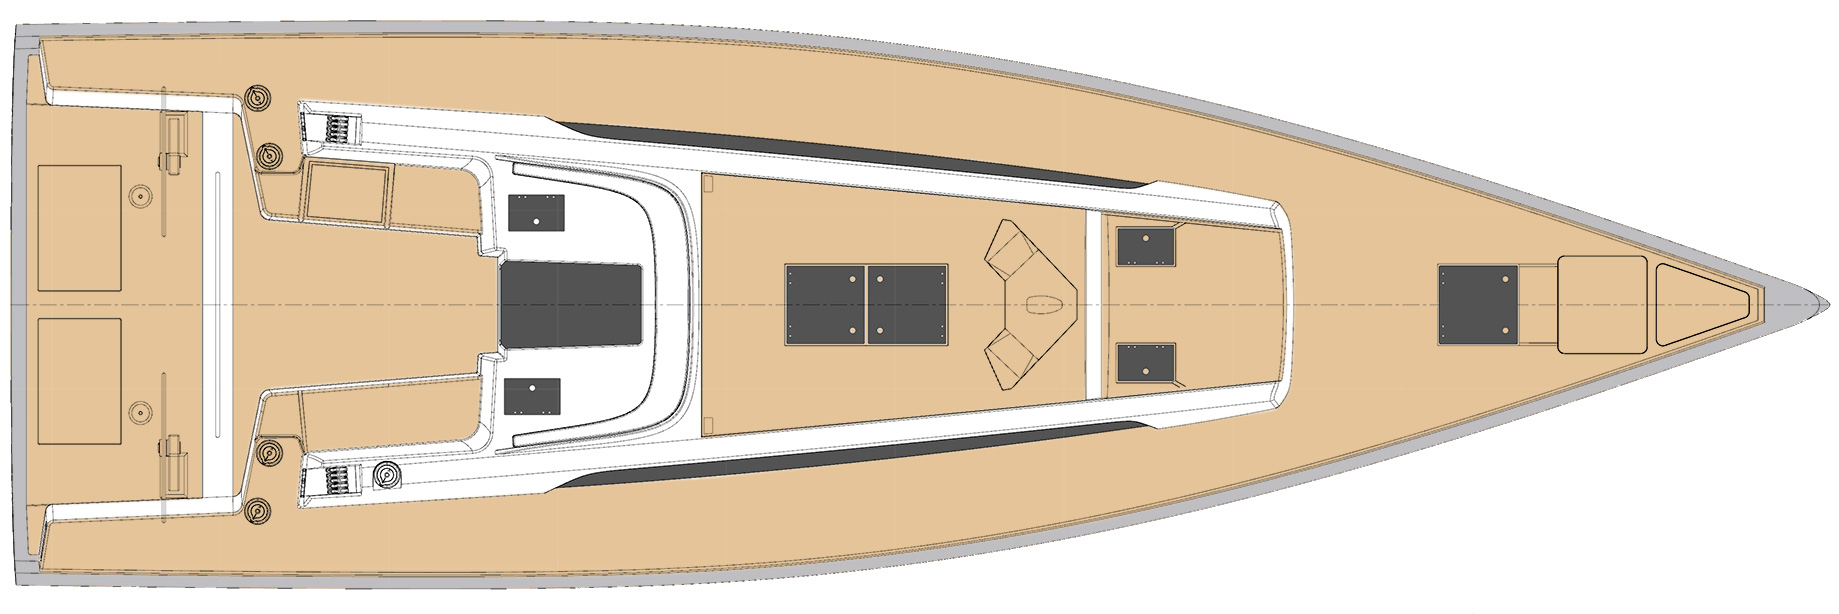 solaris yachts 44